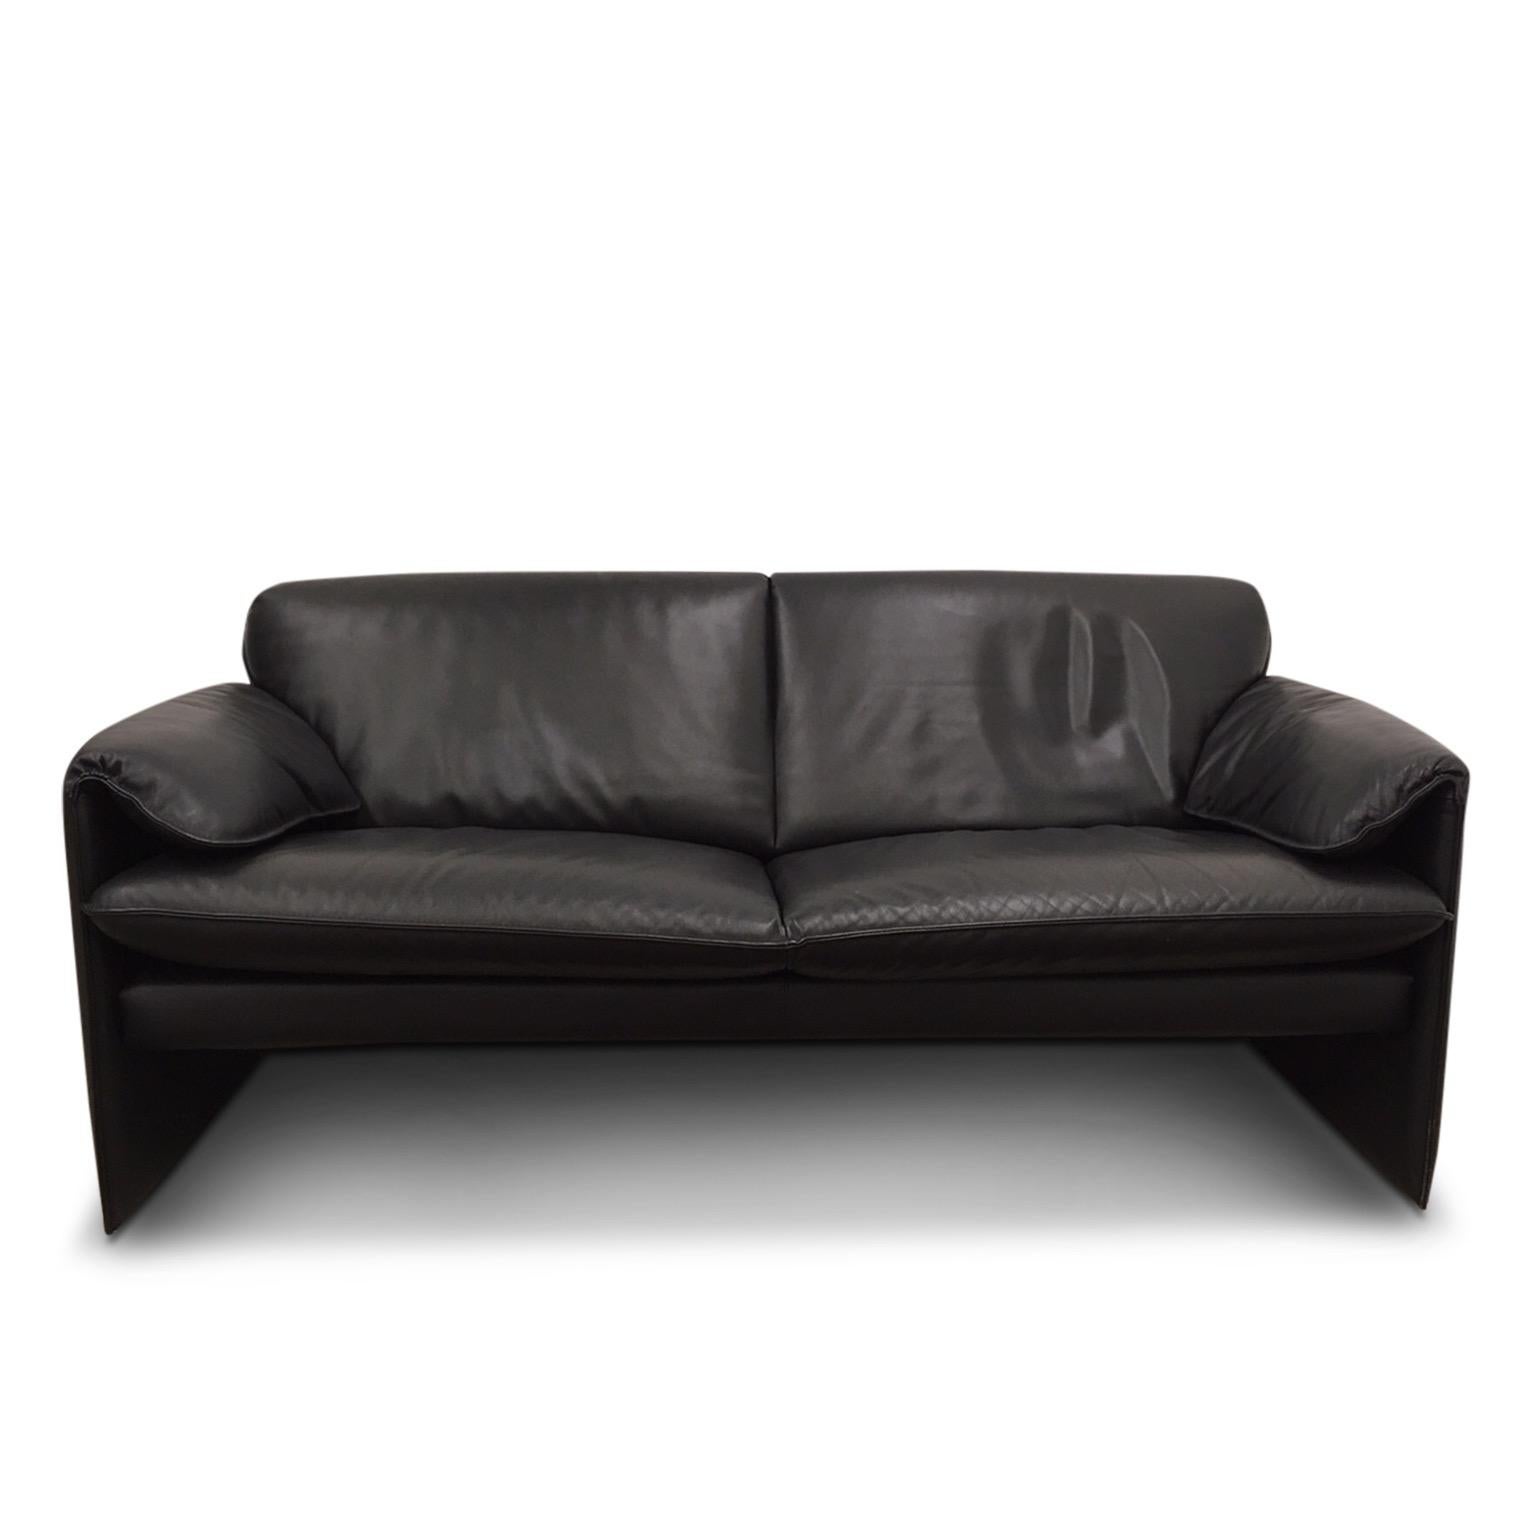 Modern Black Leather 2.5-Seat Sofa by Leolux, Model Bora Bora, 1983. FINAL SALE